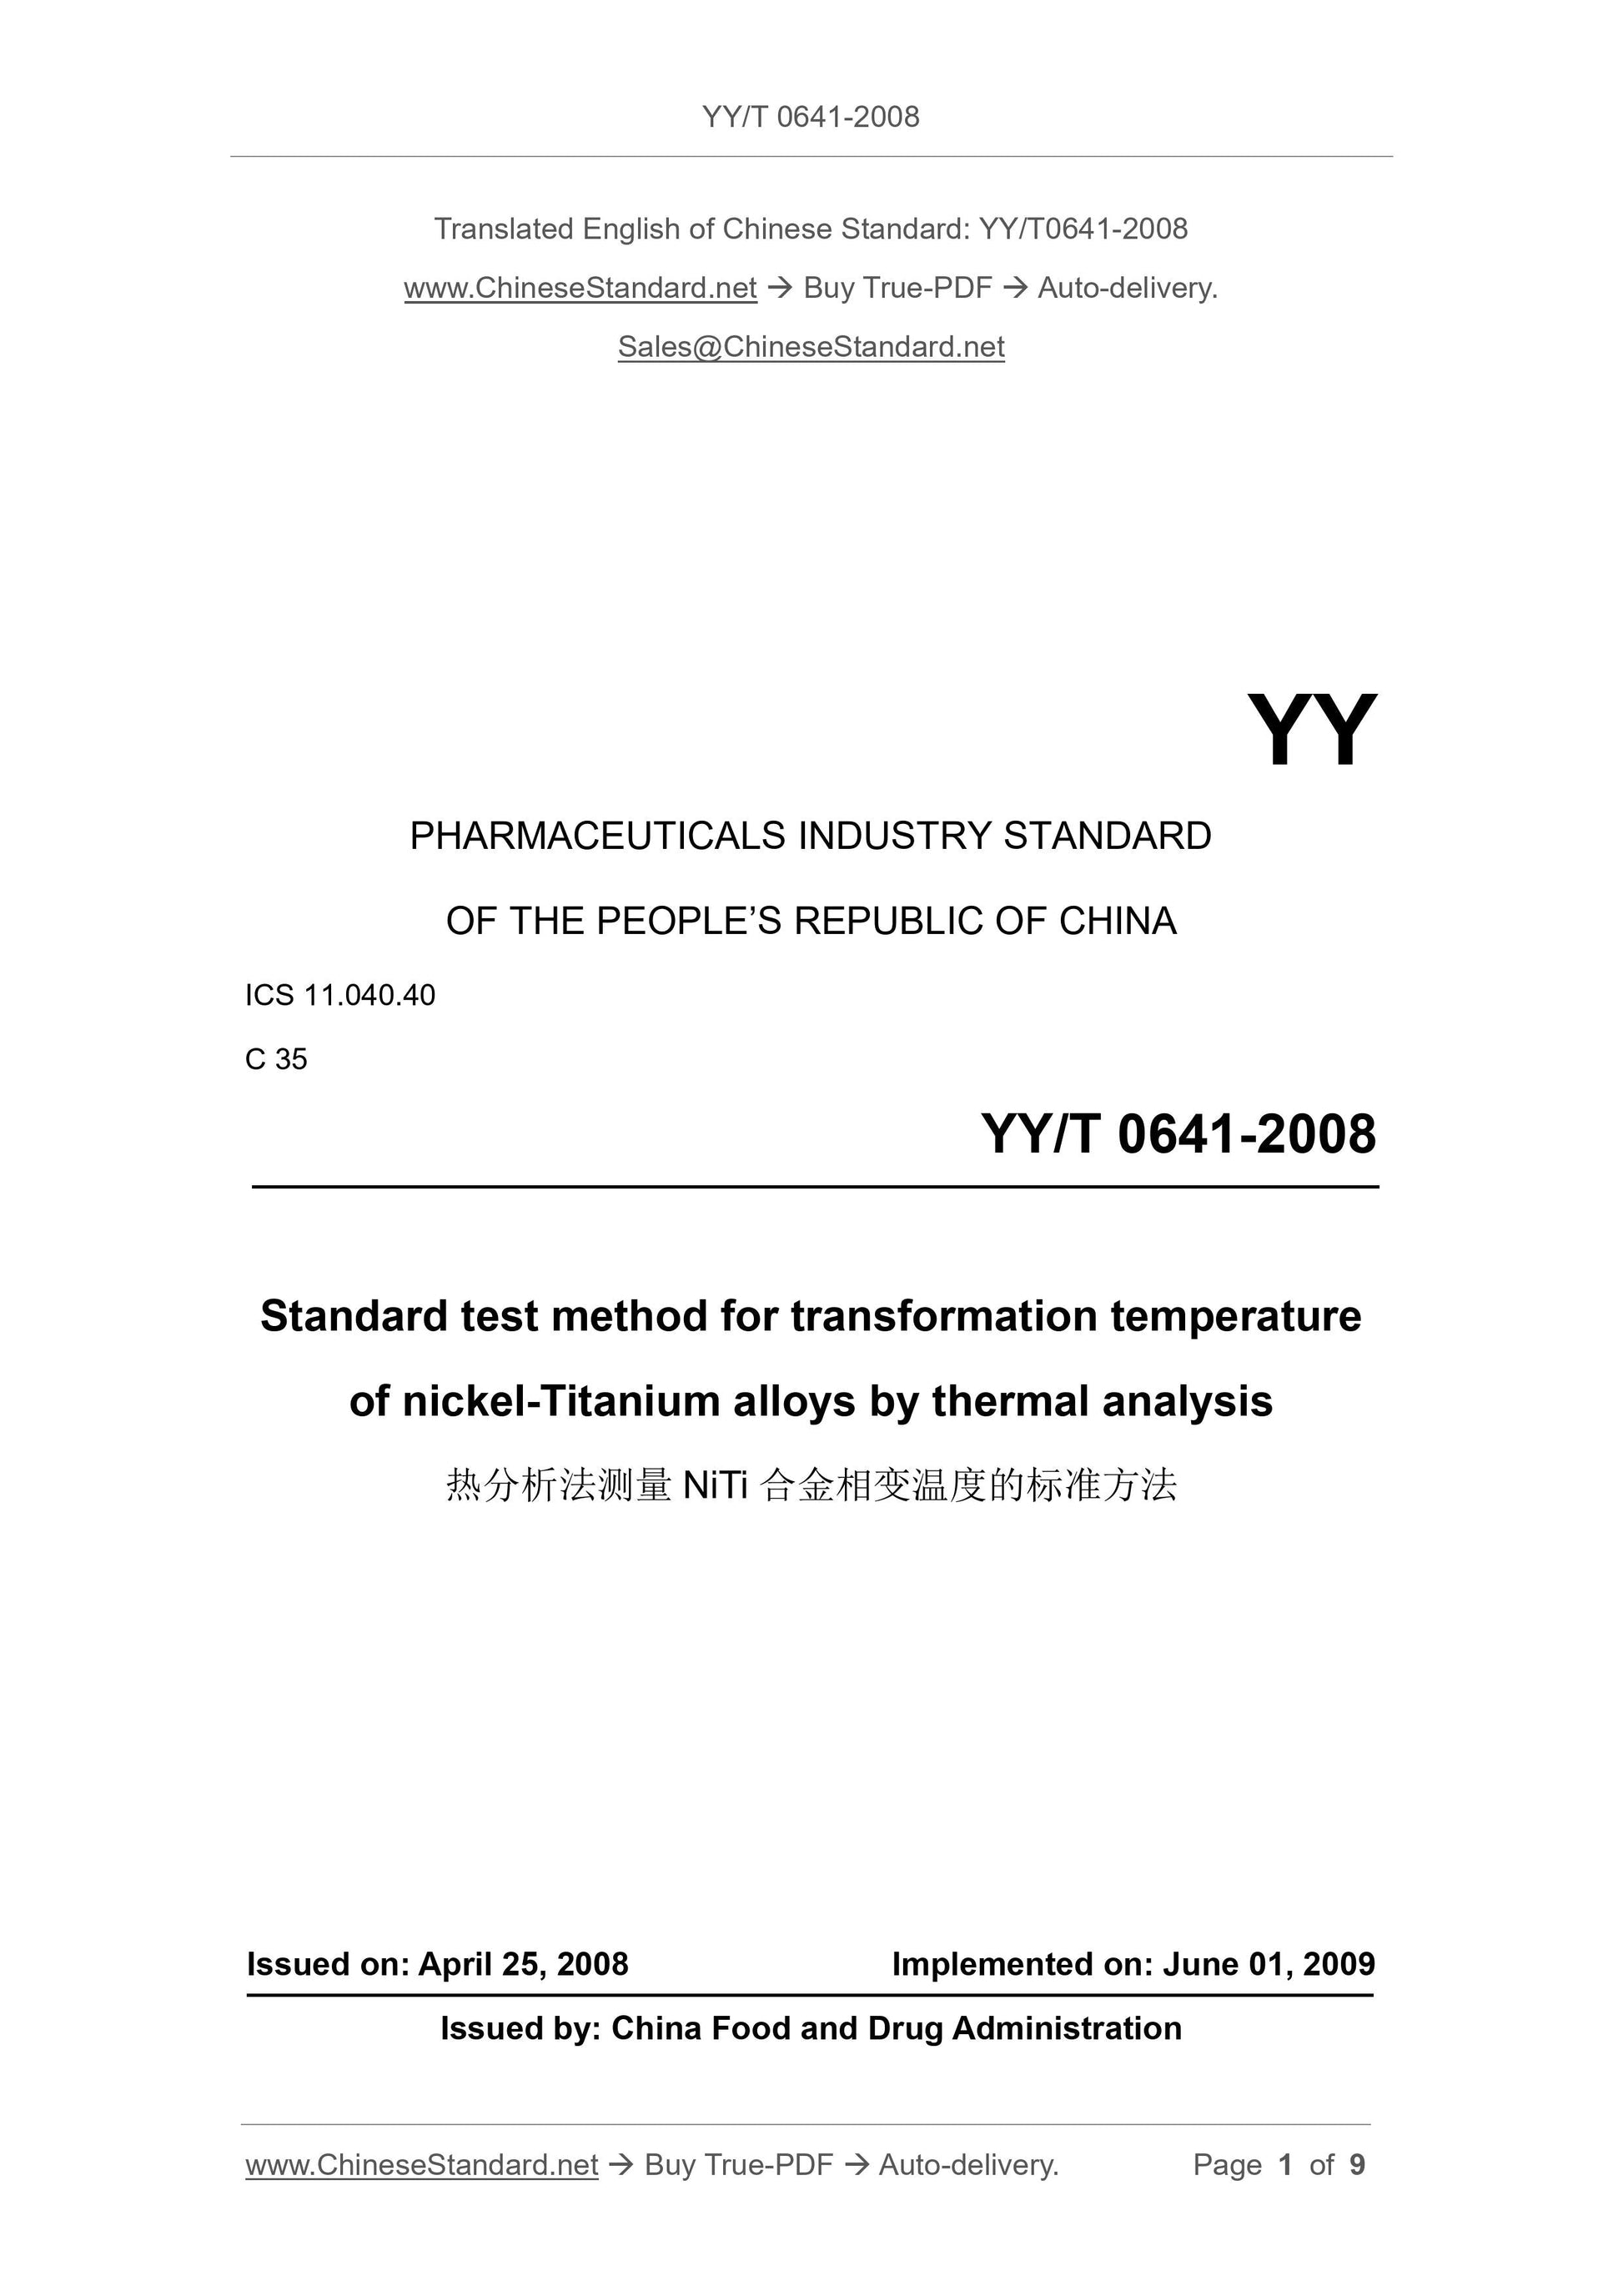 YY/T 0641-2008 Page 1